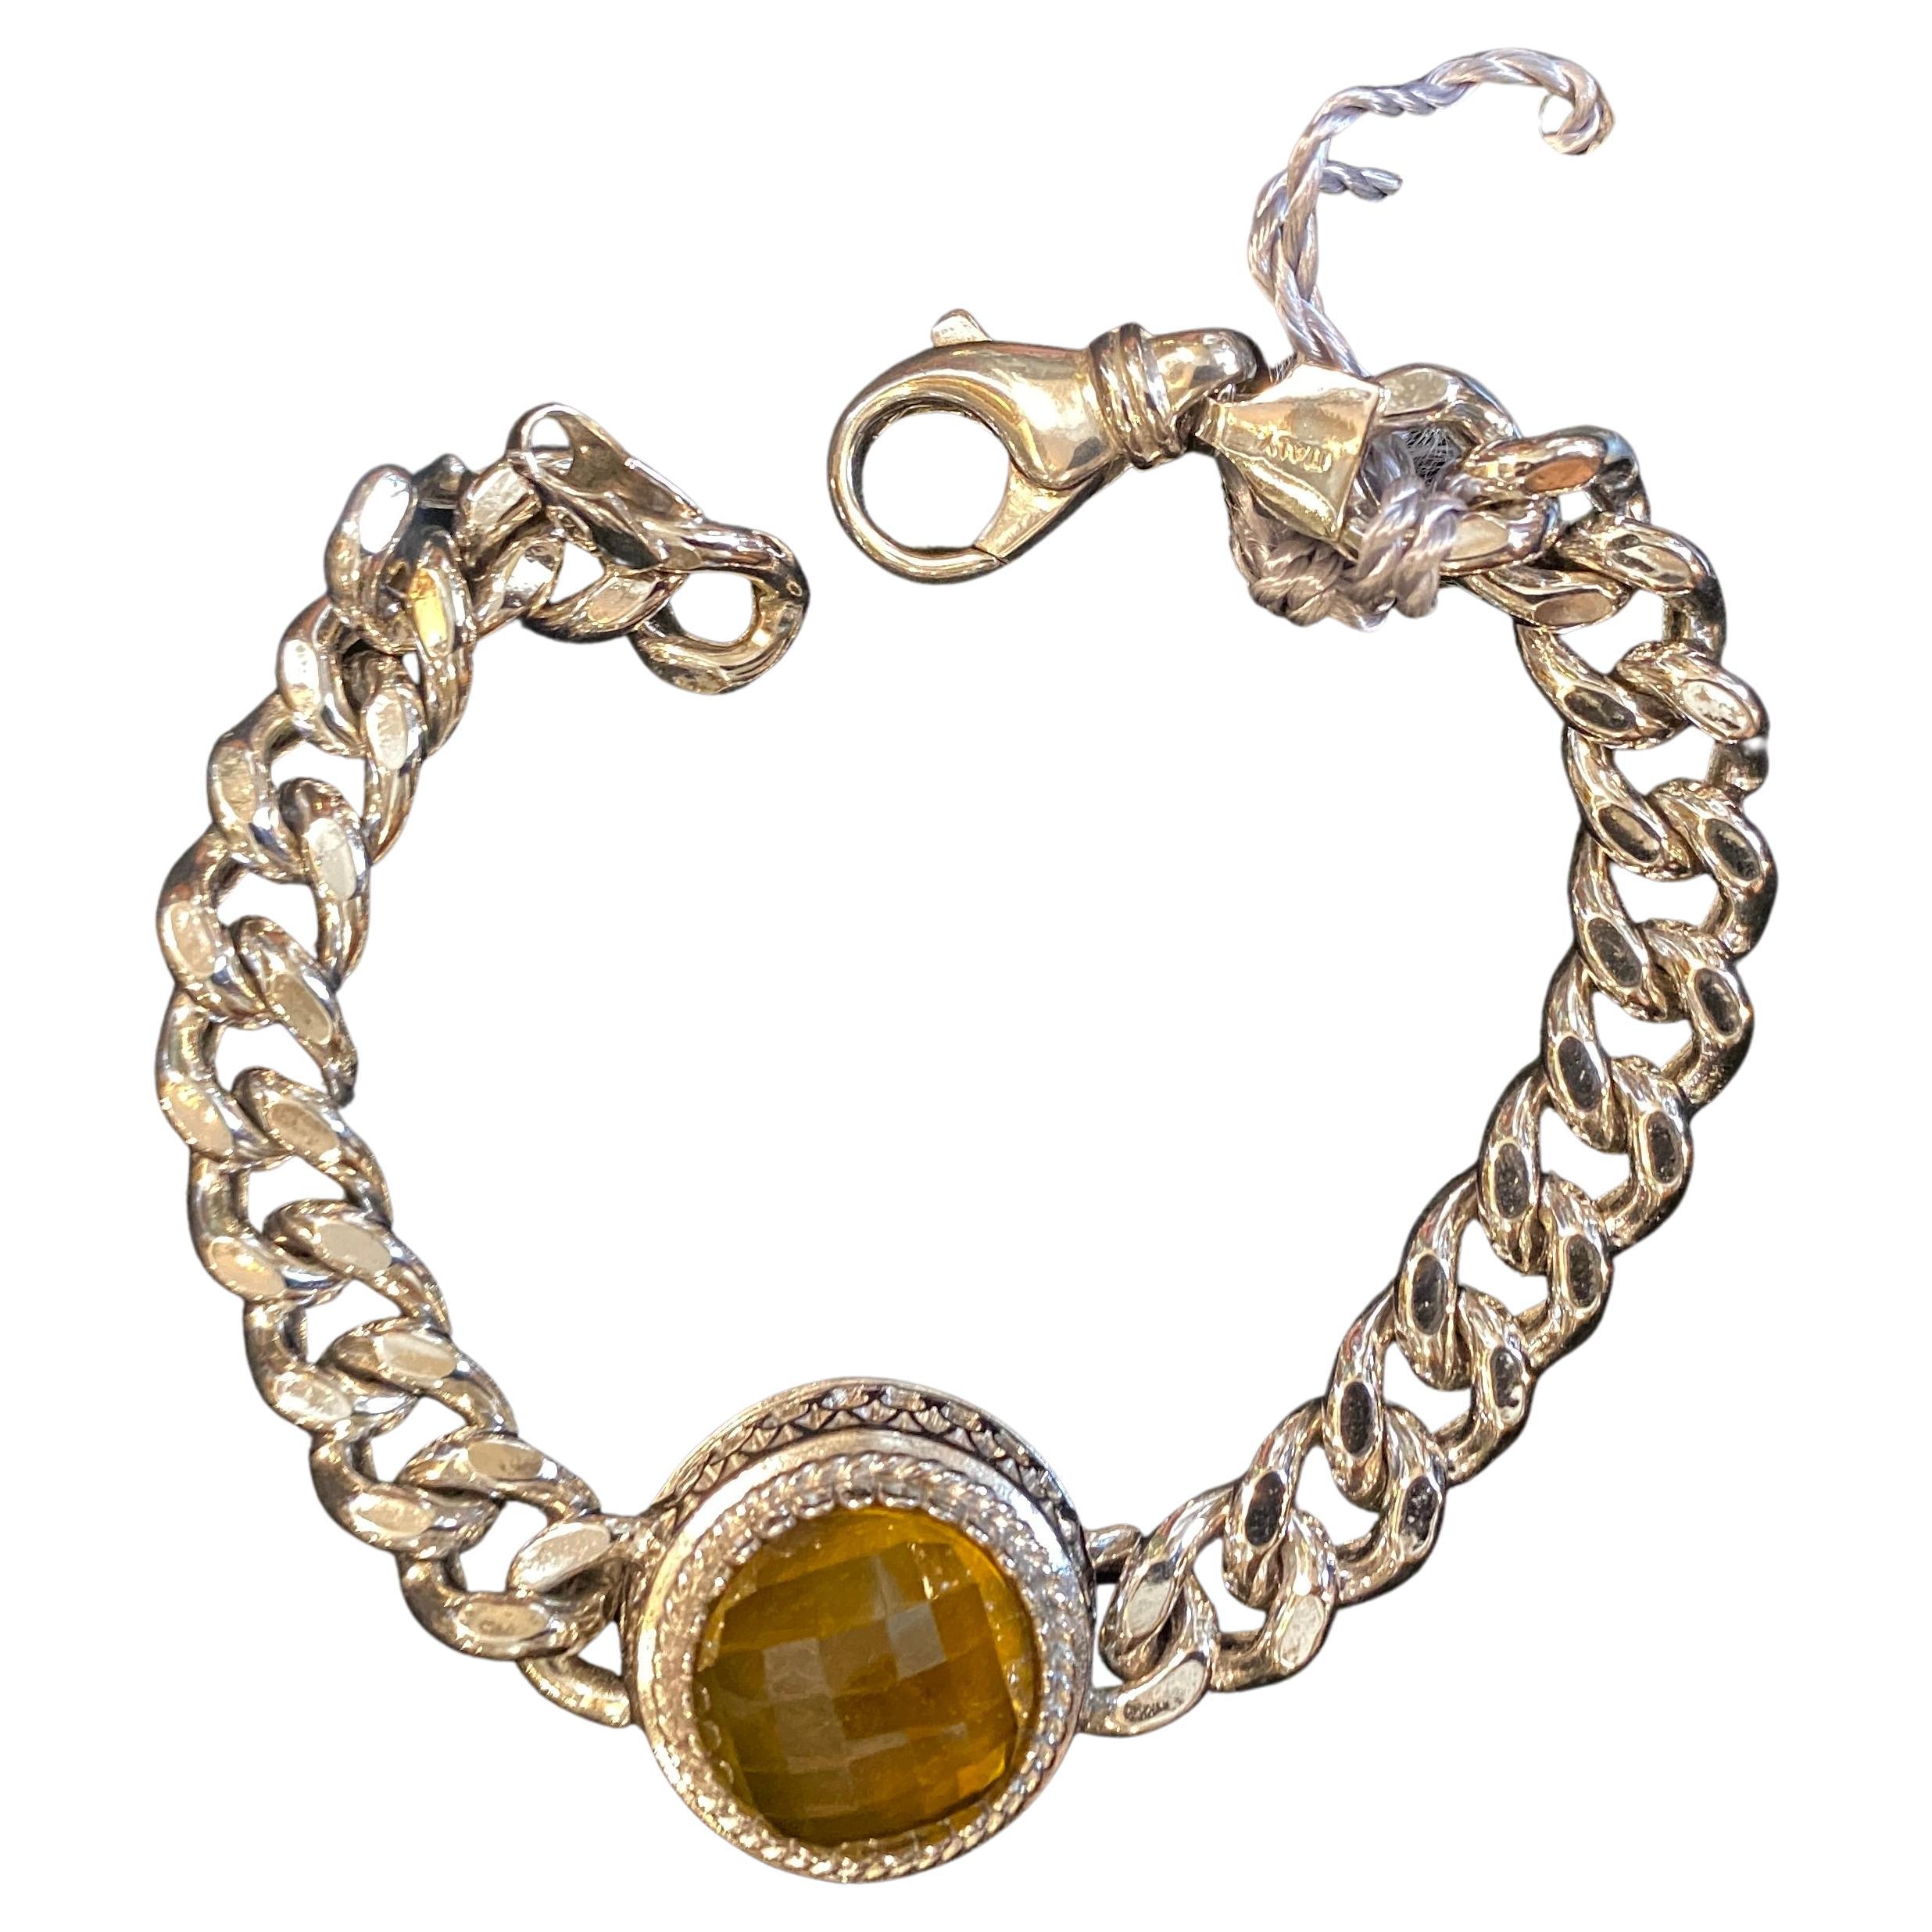 1990s Vintage Sterling Silver and Briolette Quartz Chain Bracelet by Anomis For Sale